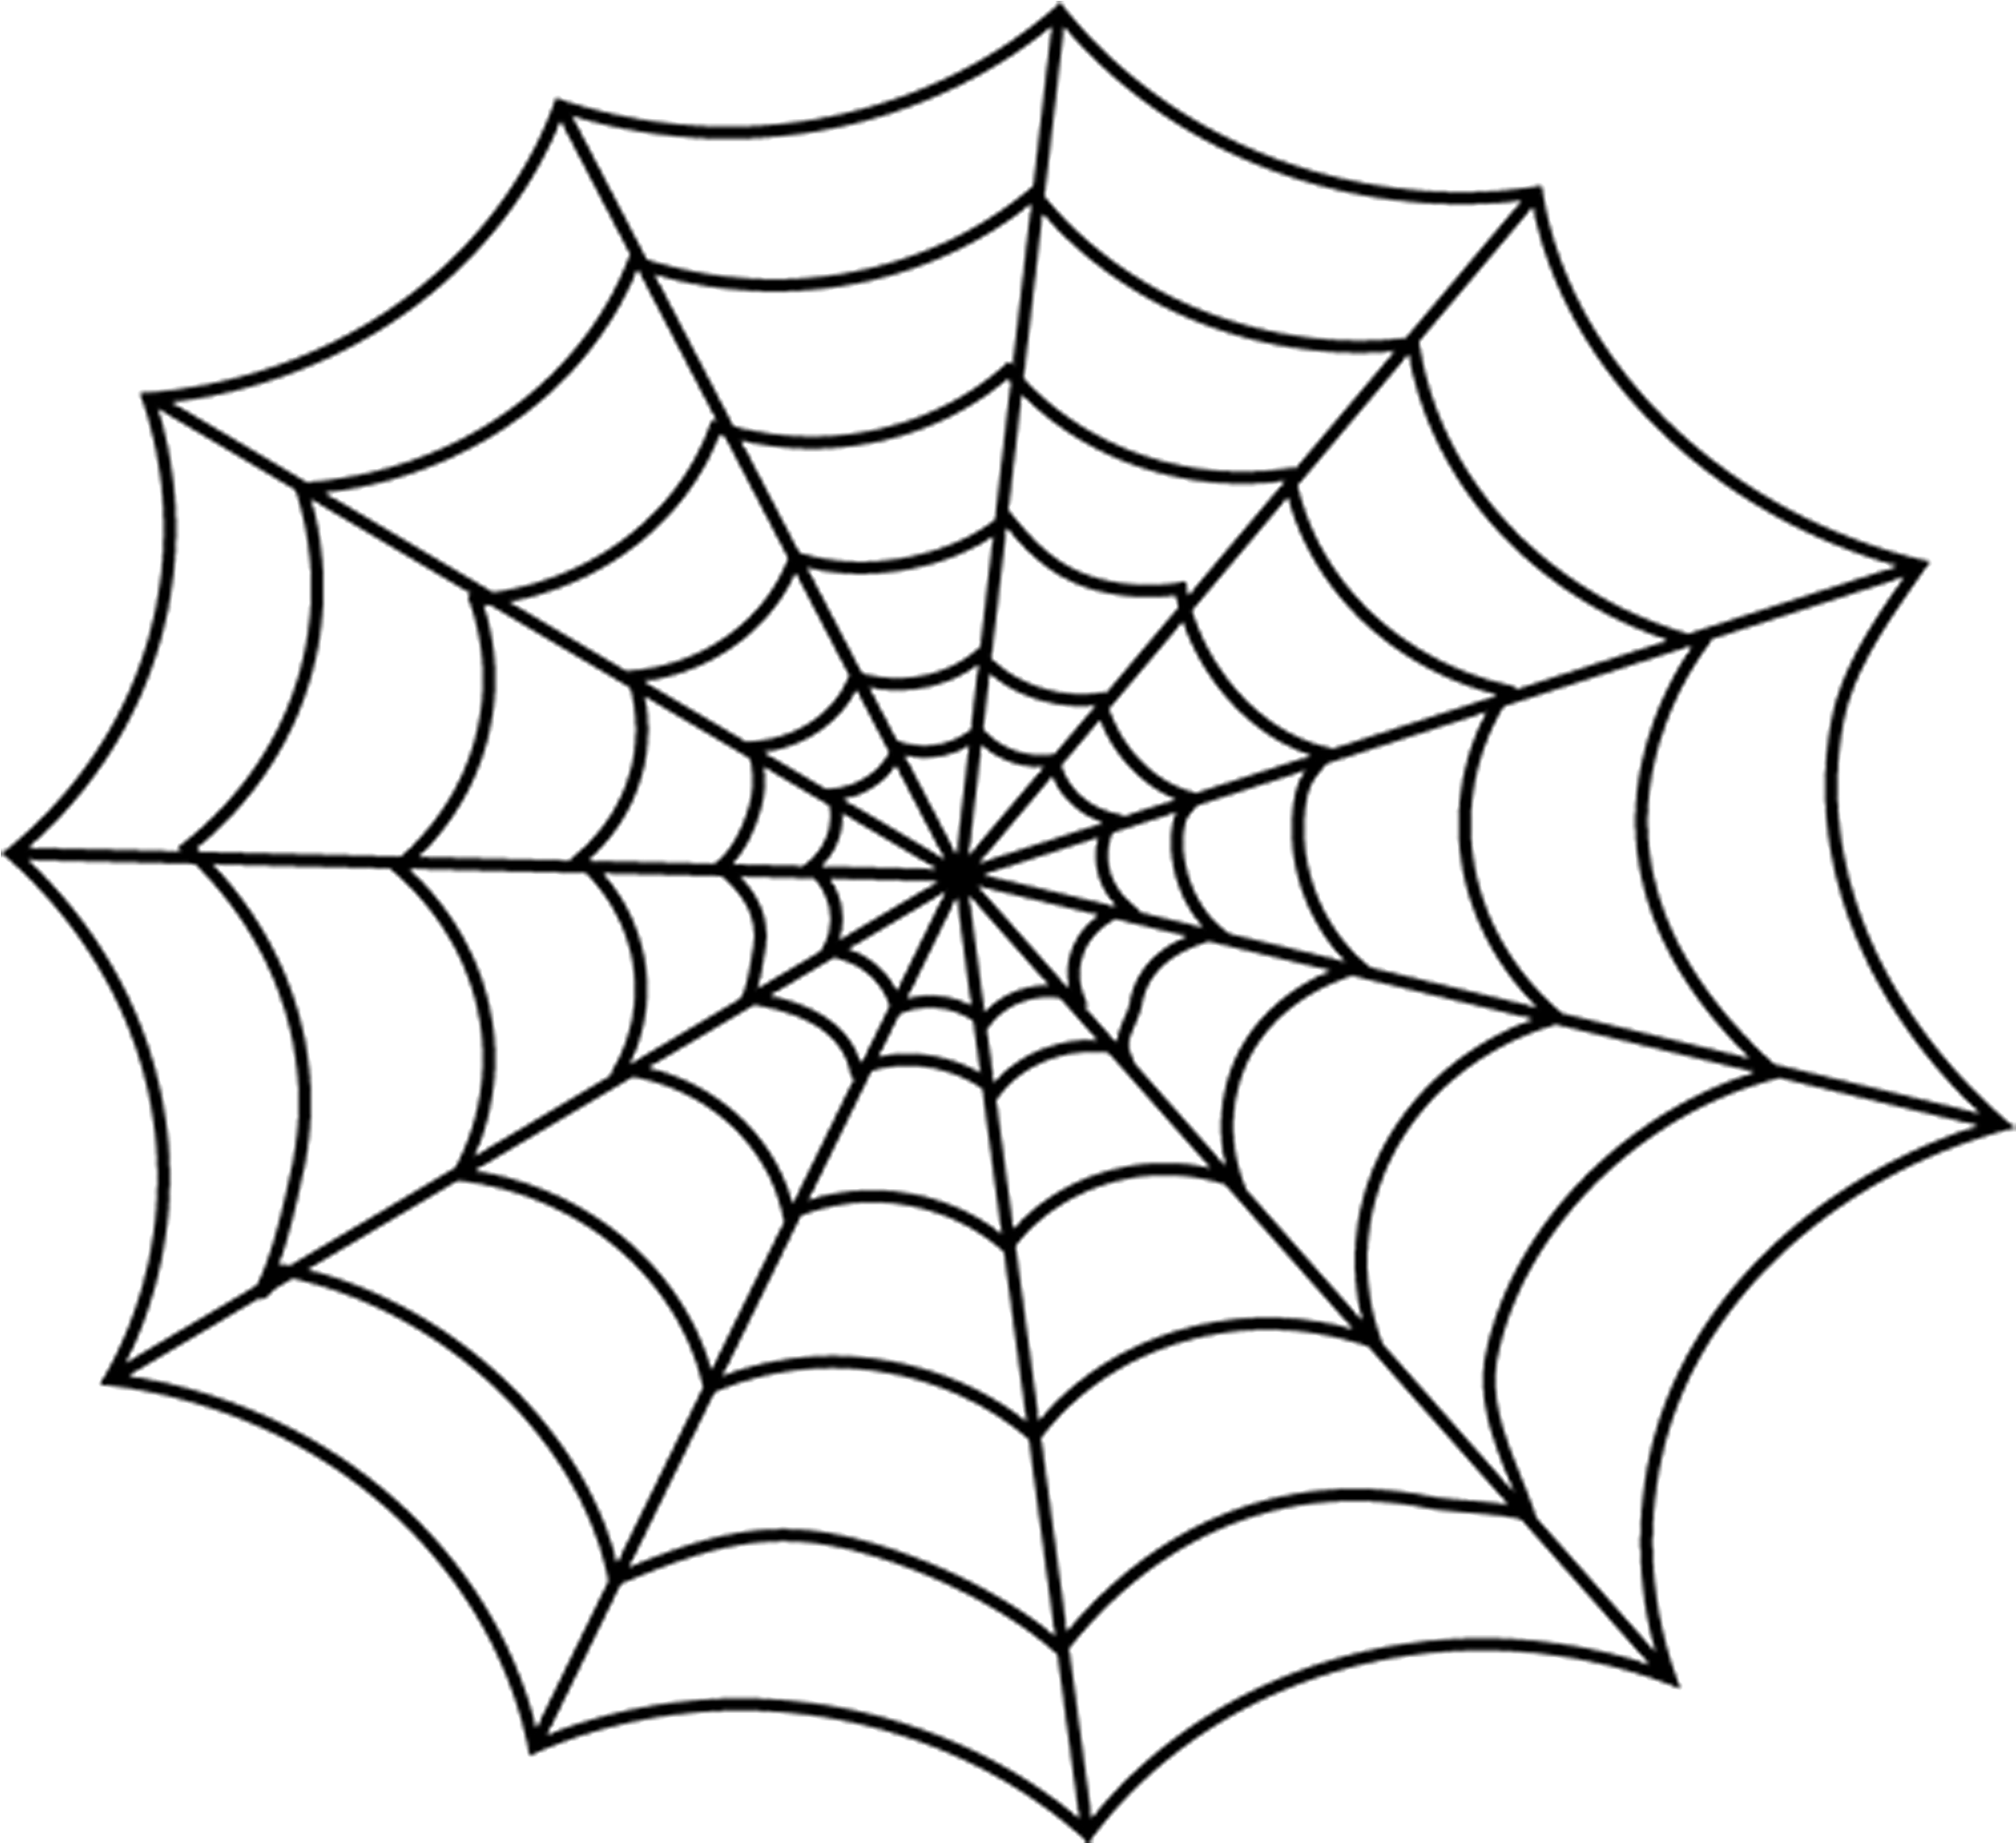 Symmetrical Spider Web Drawing